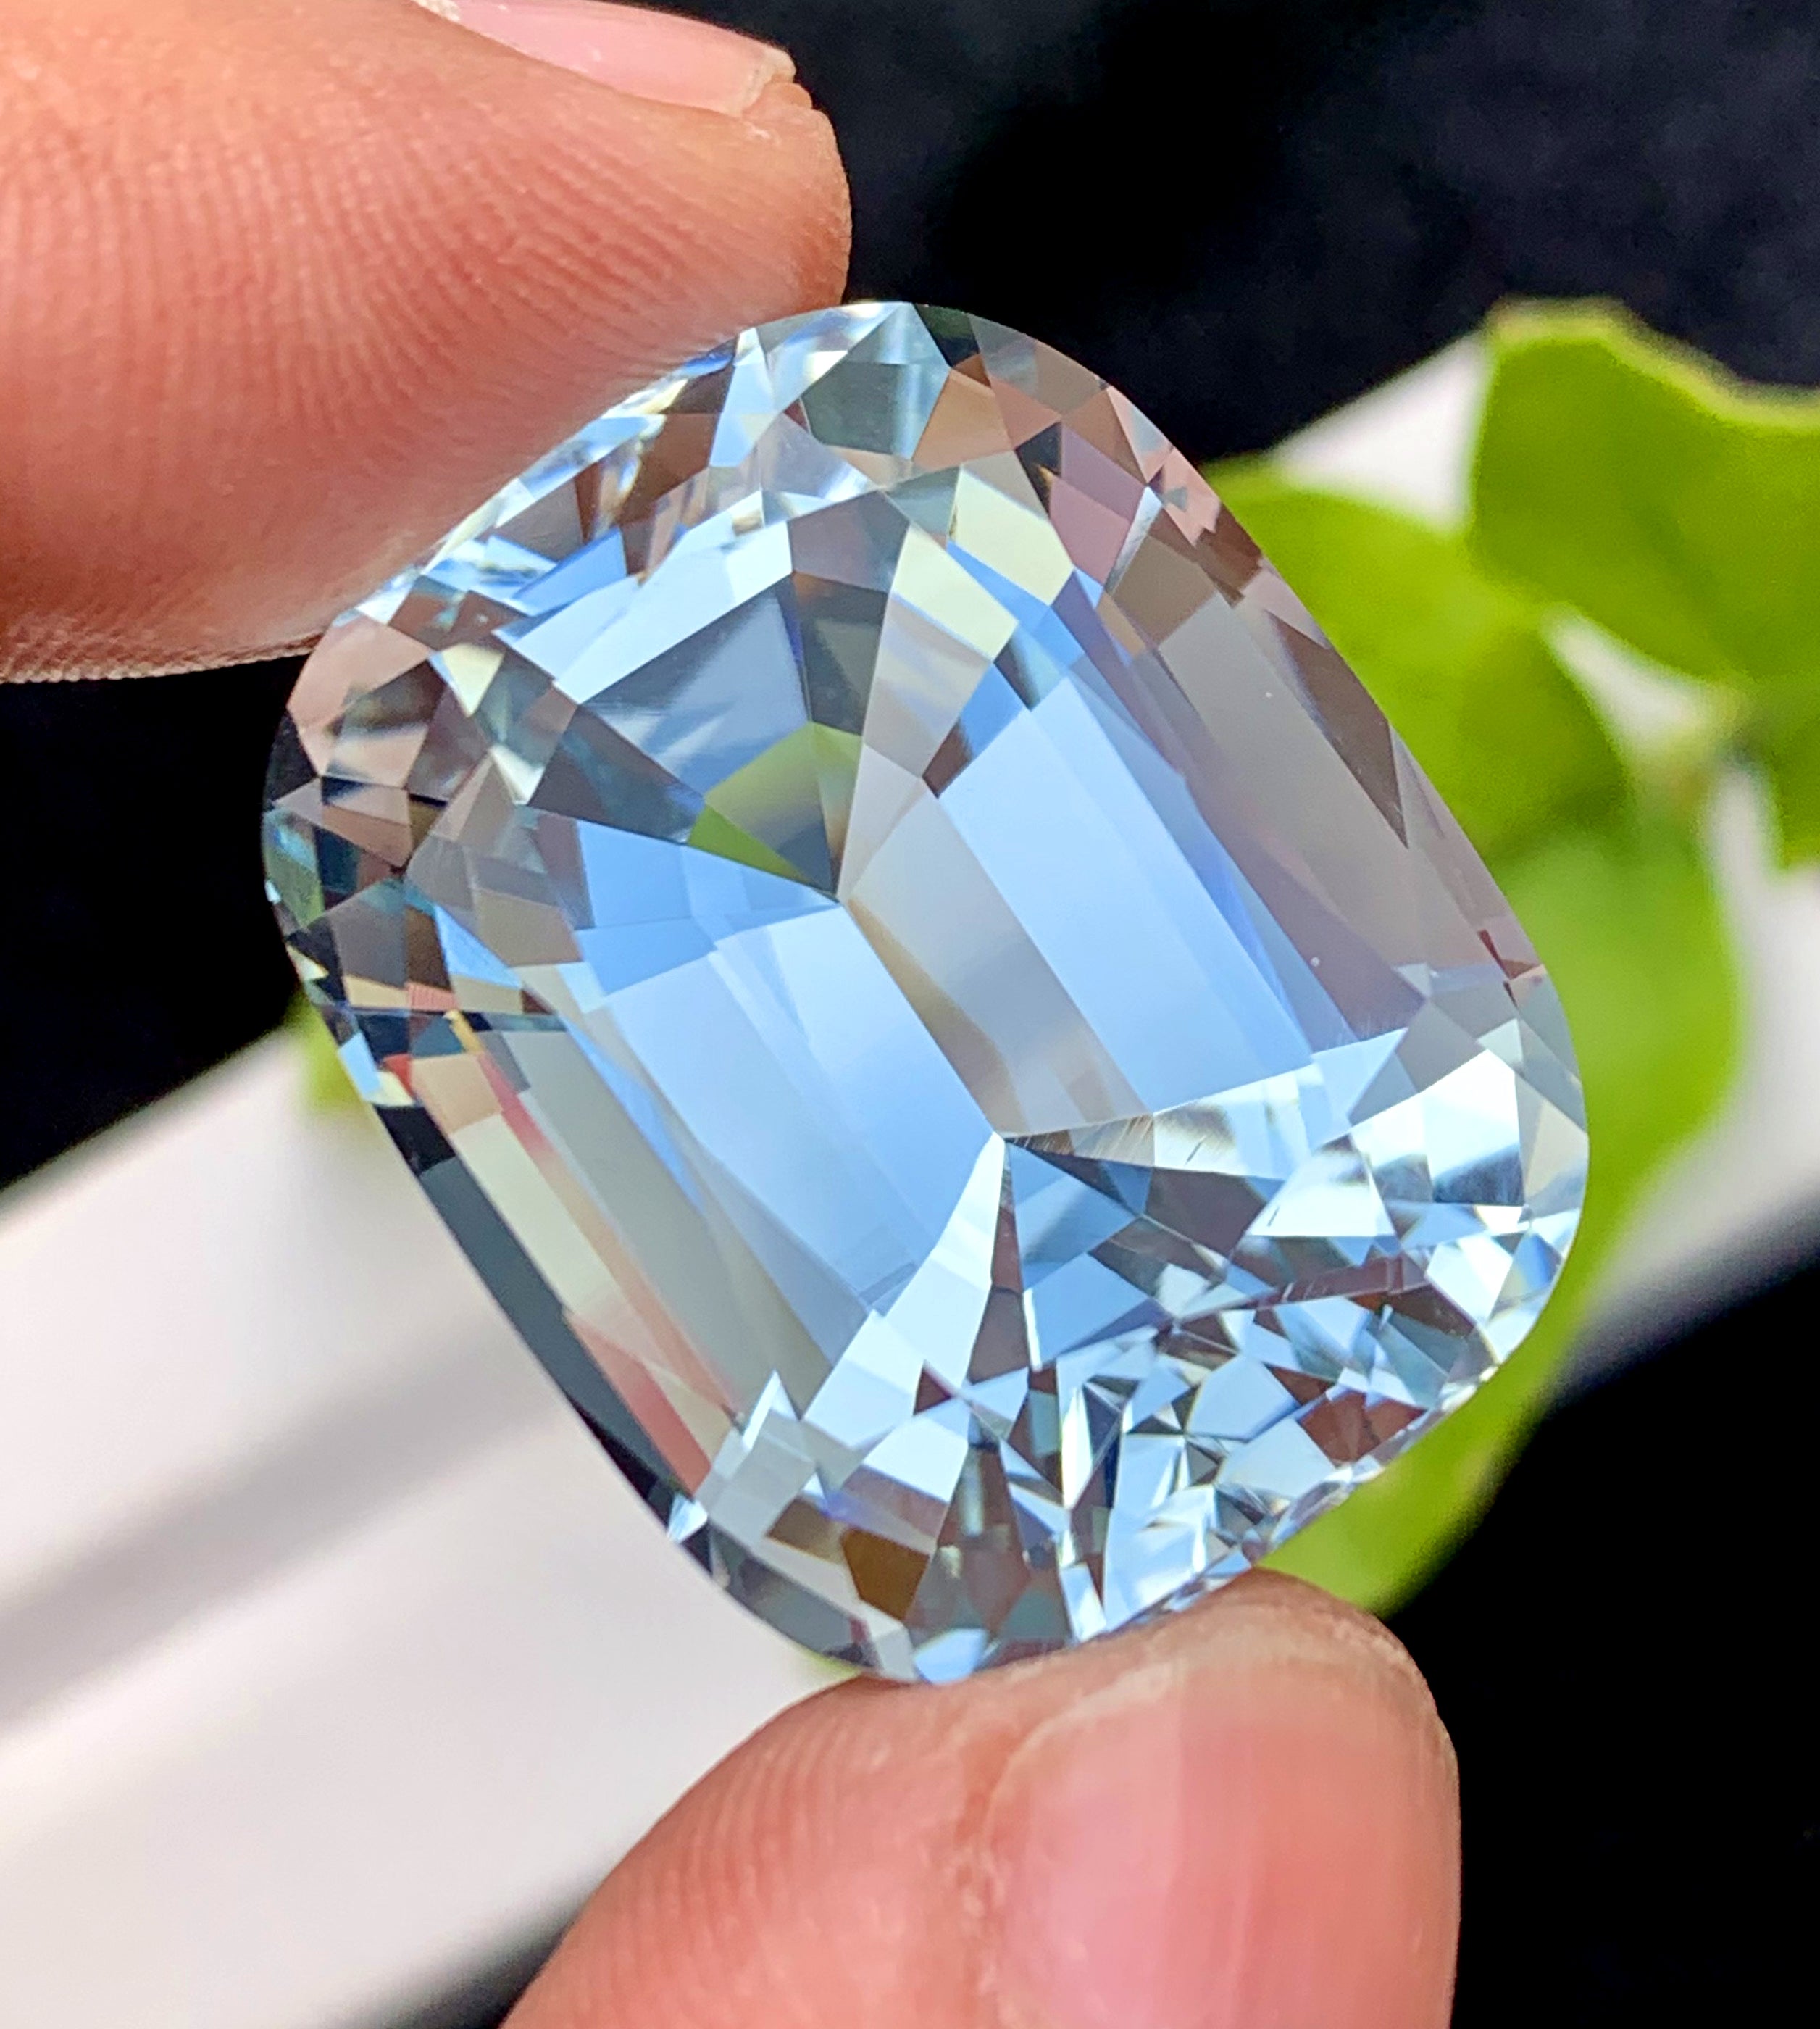 Cusshion Cut Natural Aquamarne Gemstone, Loose Gemstone, Aqua Faceted Cut Stone, Gemstone Jewelry - 52.65 CT